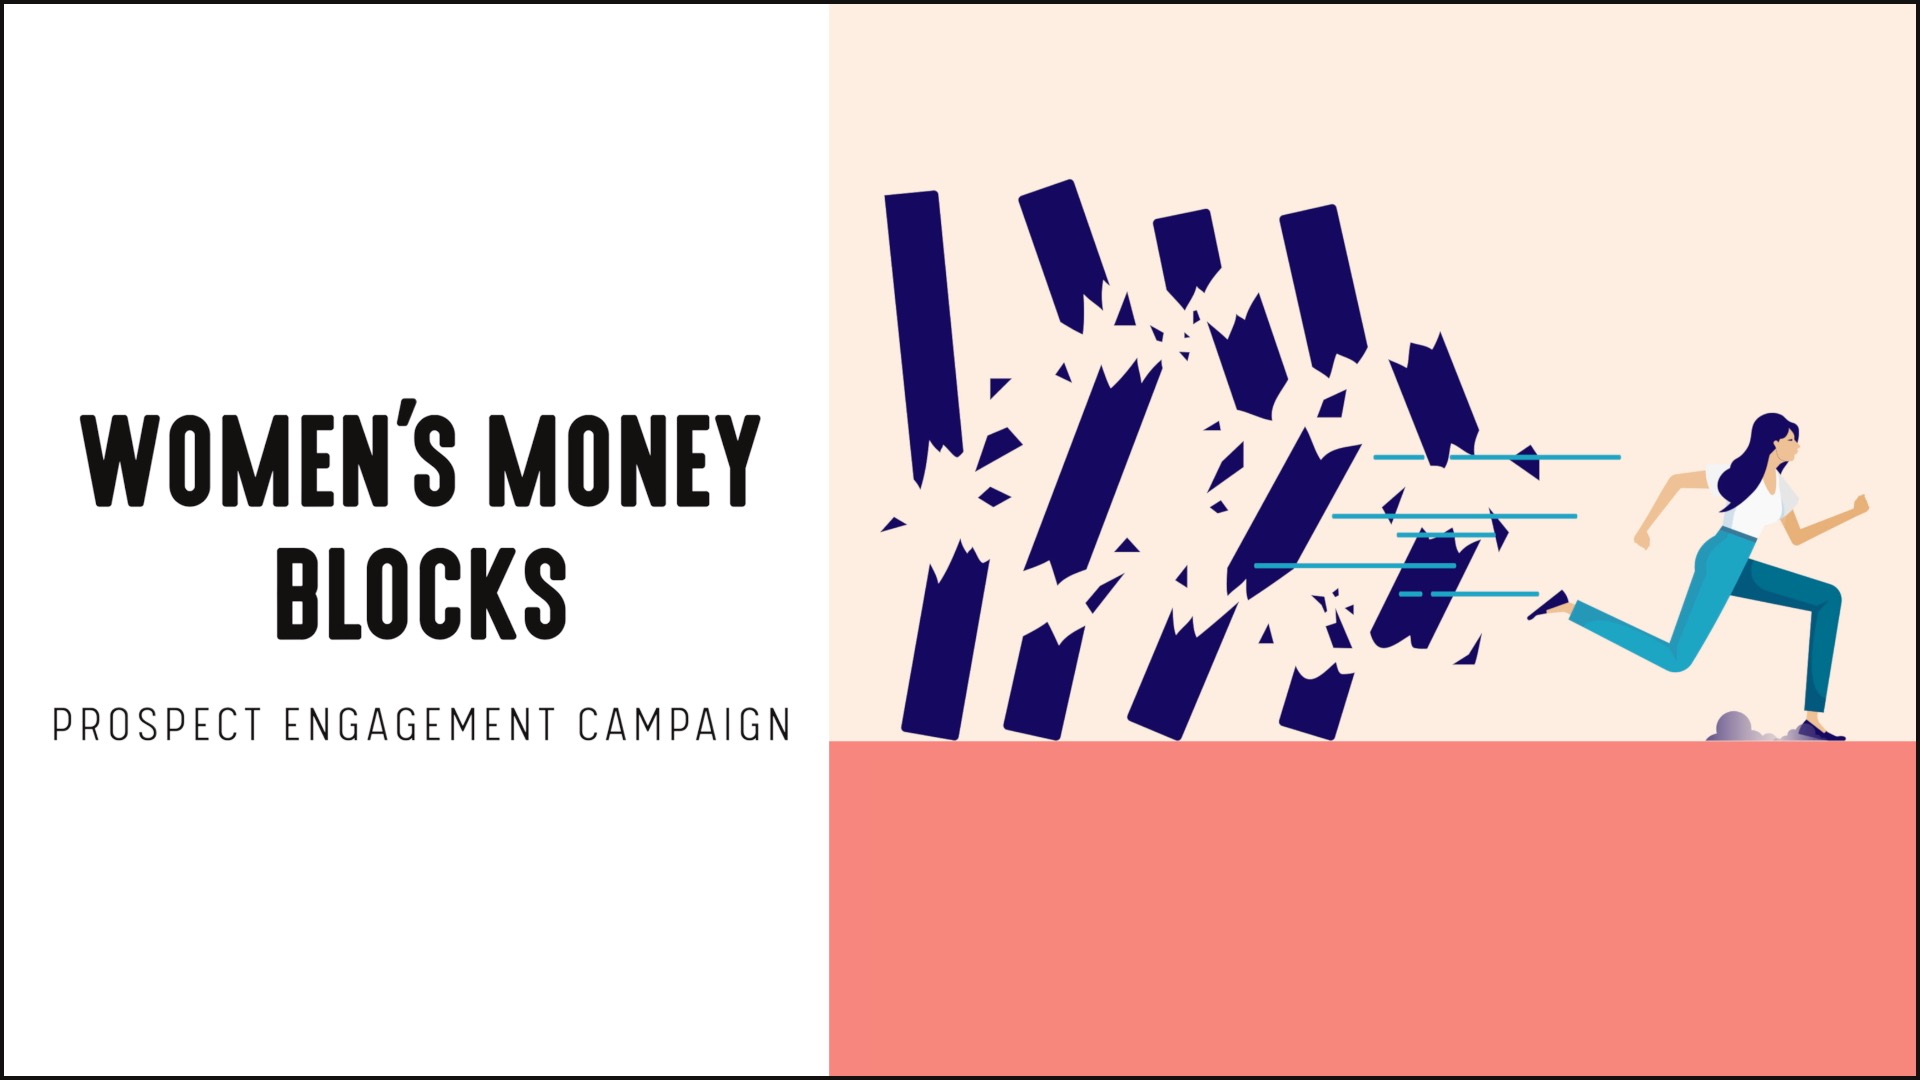 [NEW] Prospect Engagement Campaign | Women’s Money Blocks